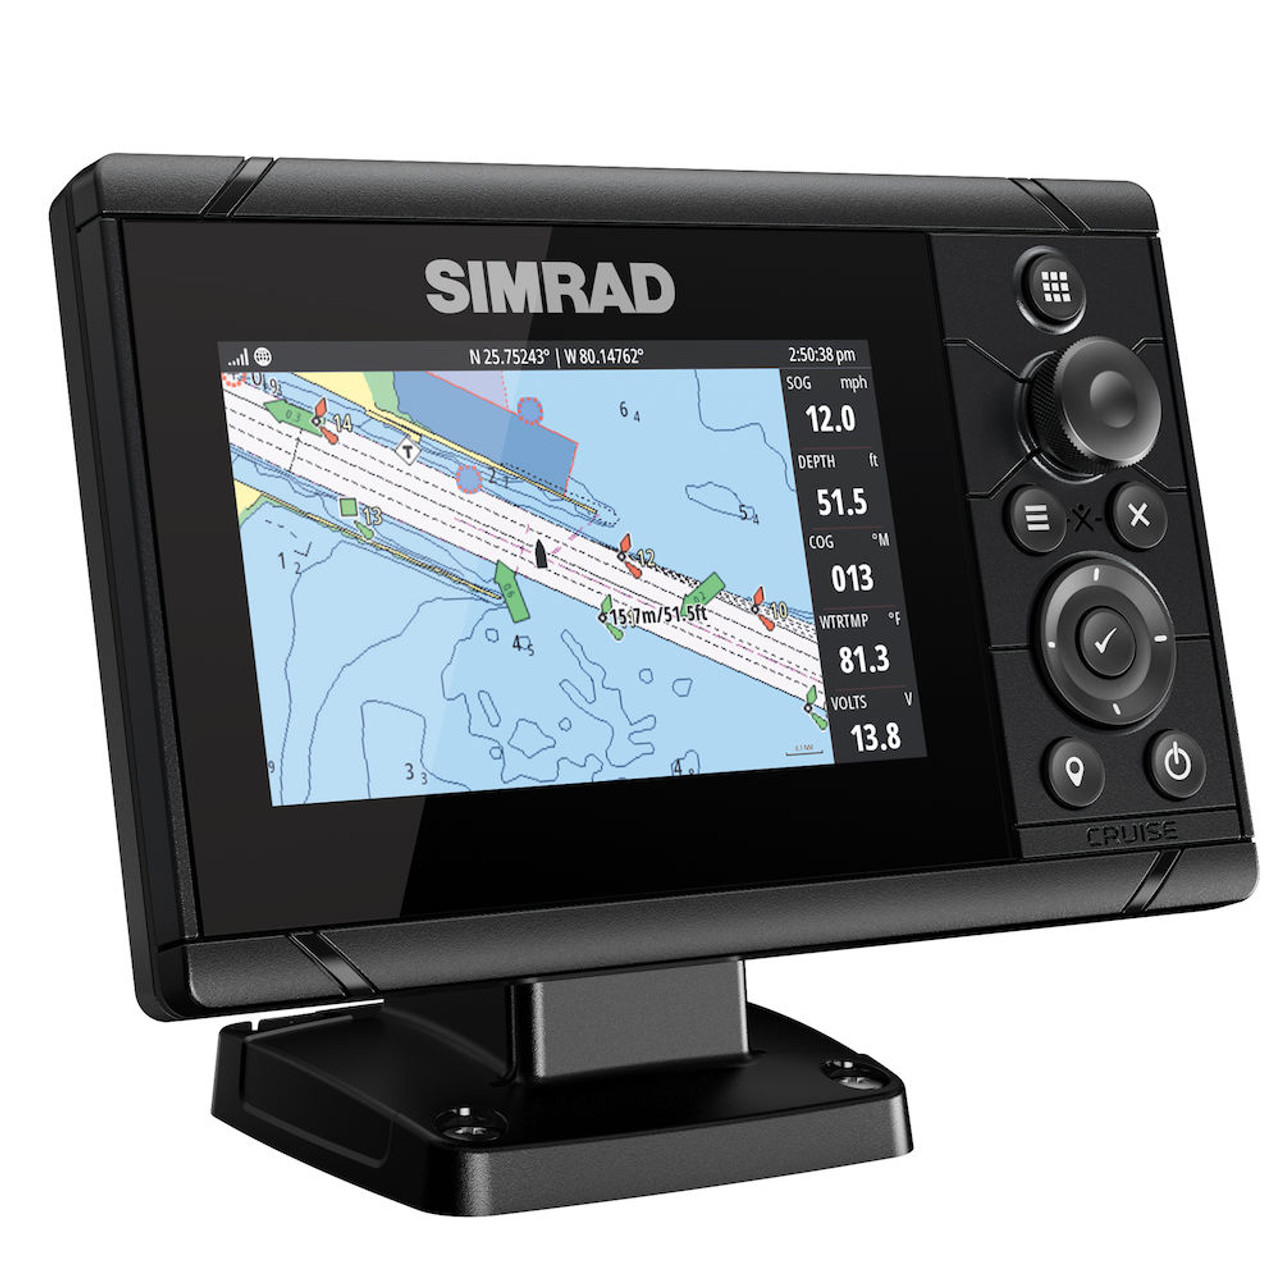 Simrad Cruise with 83/200 Transducer